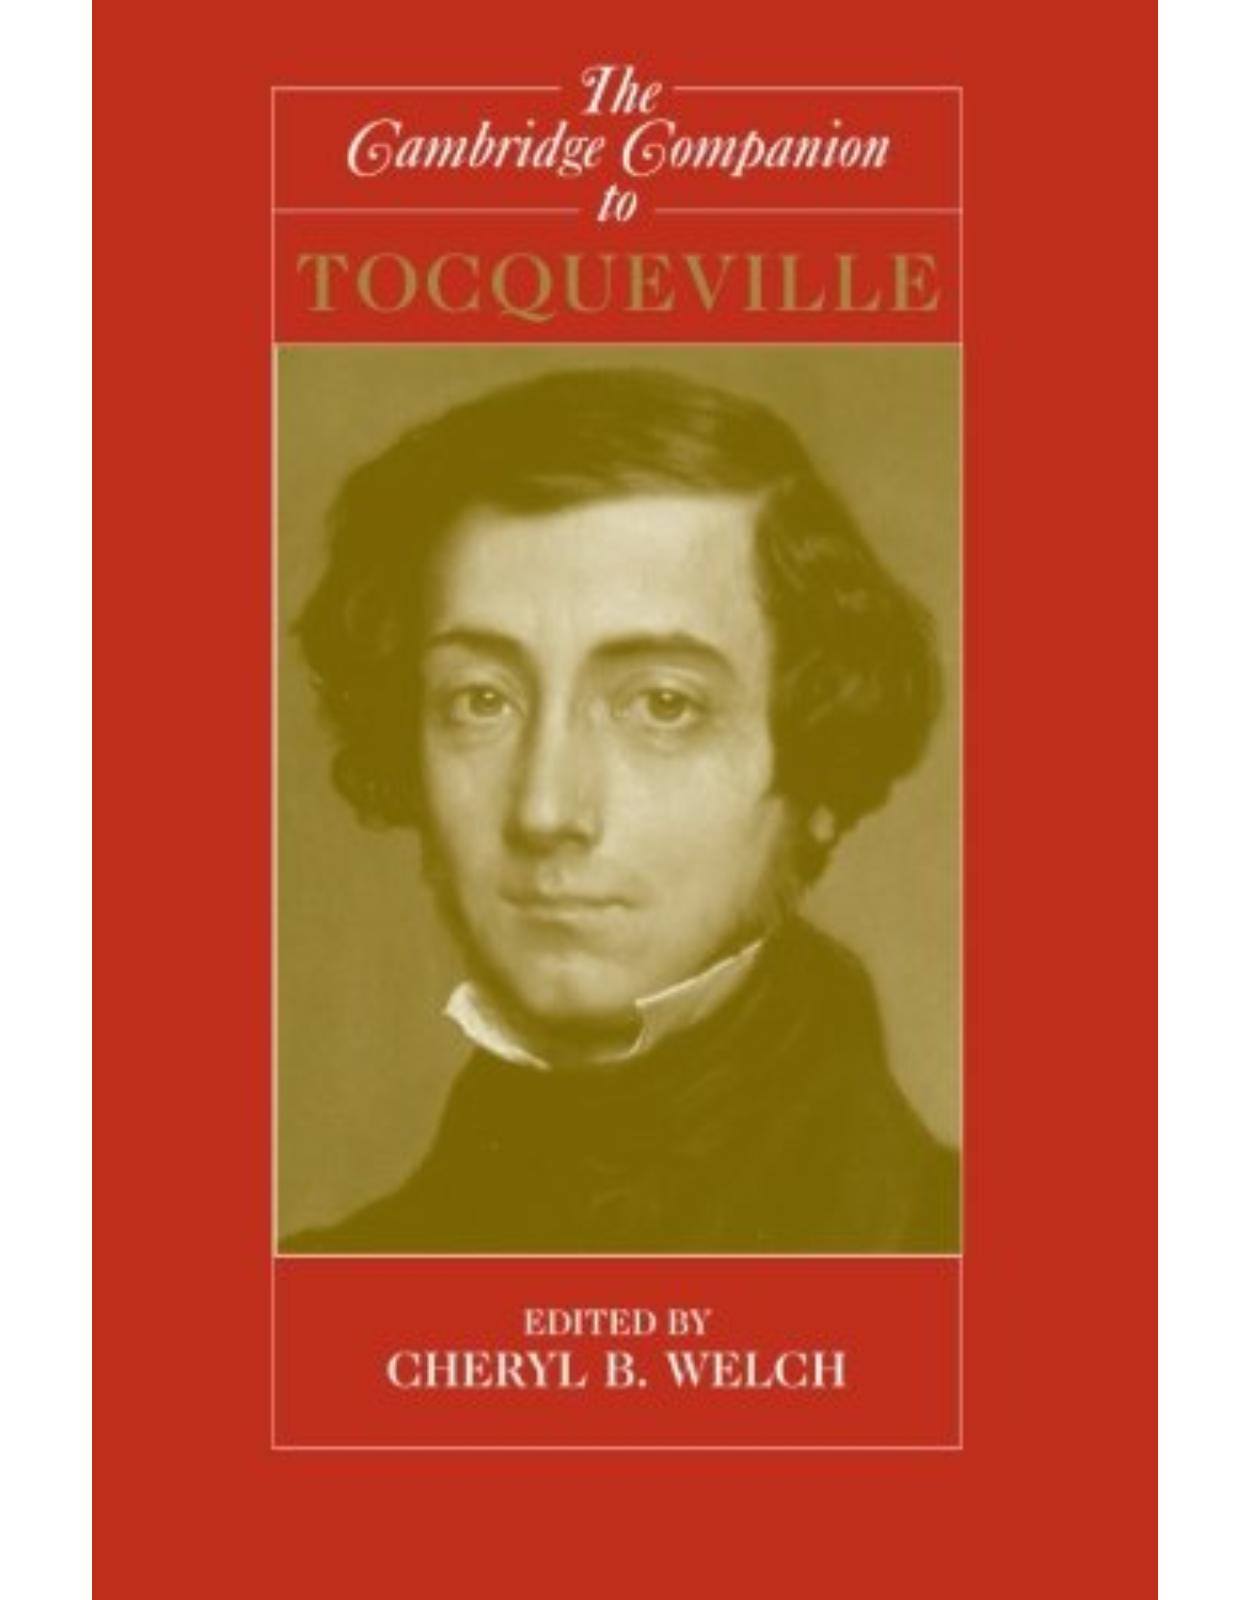 The Cambridge Companion to Tocqueville (Cambridge Companions to Philosophy)